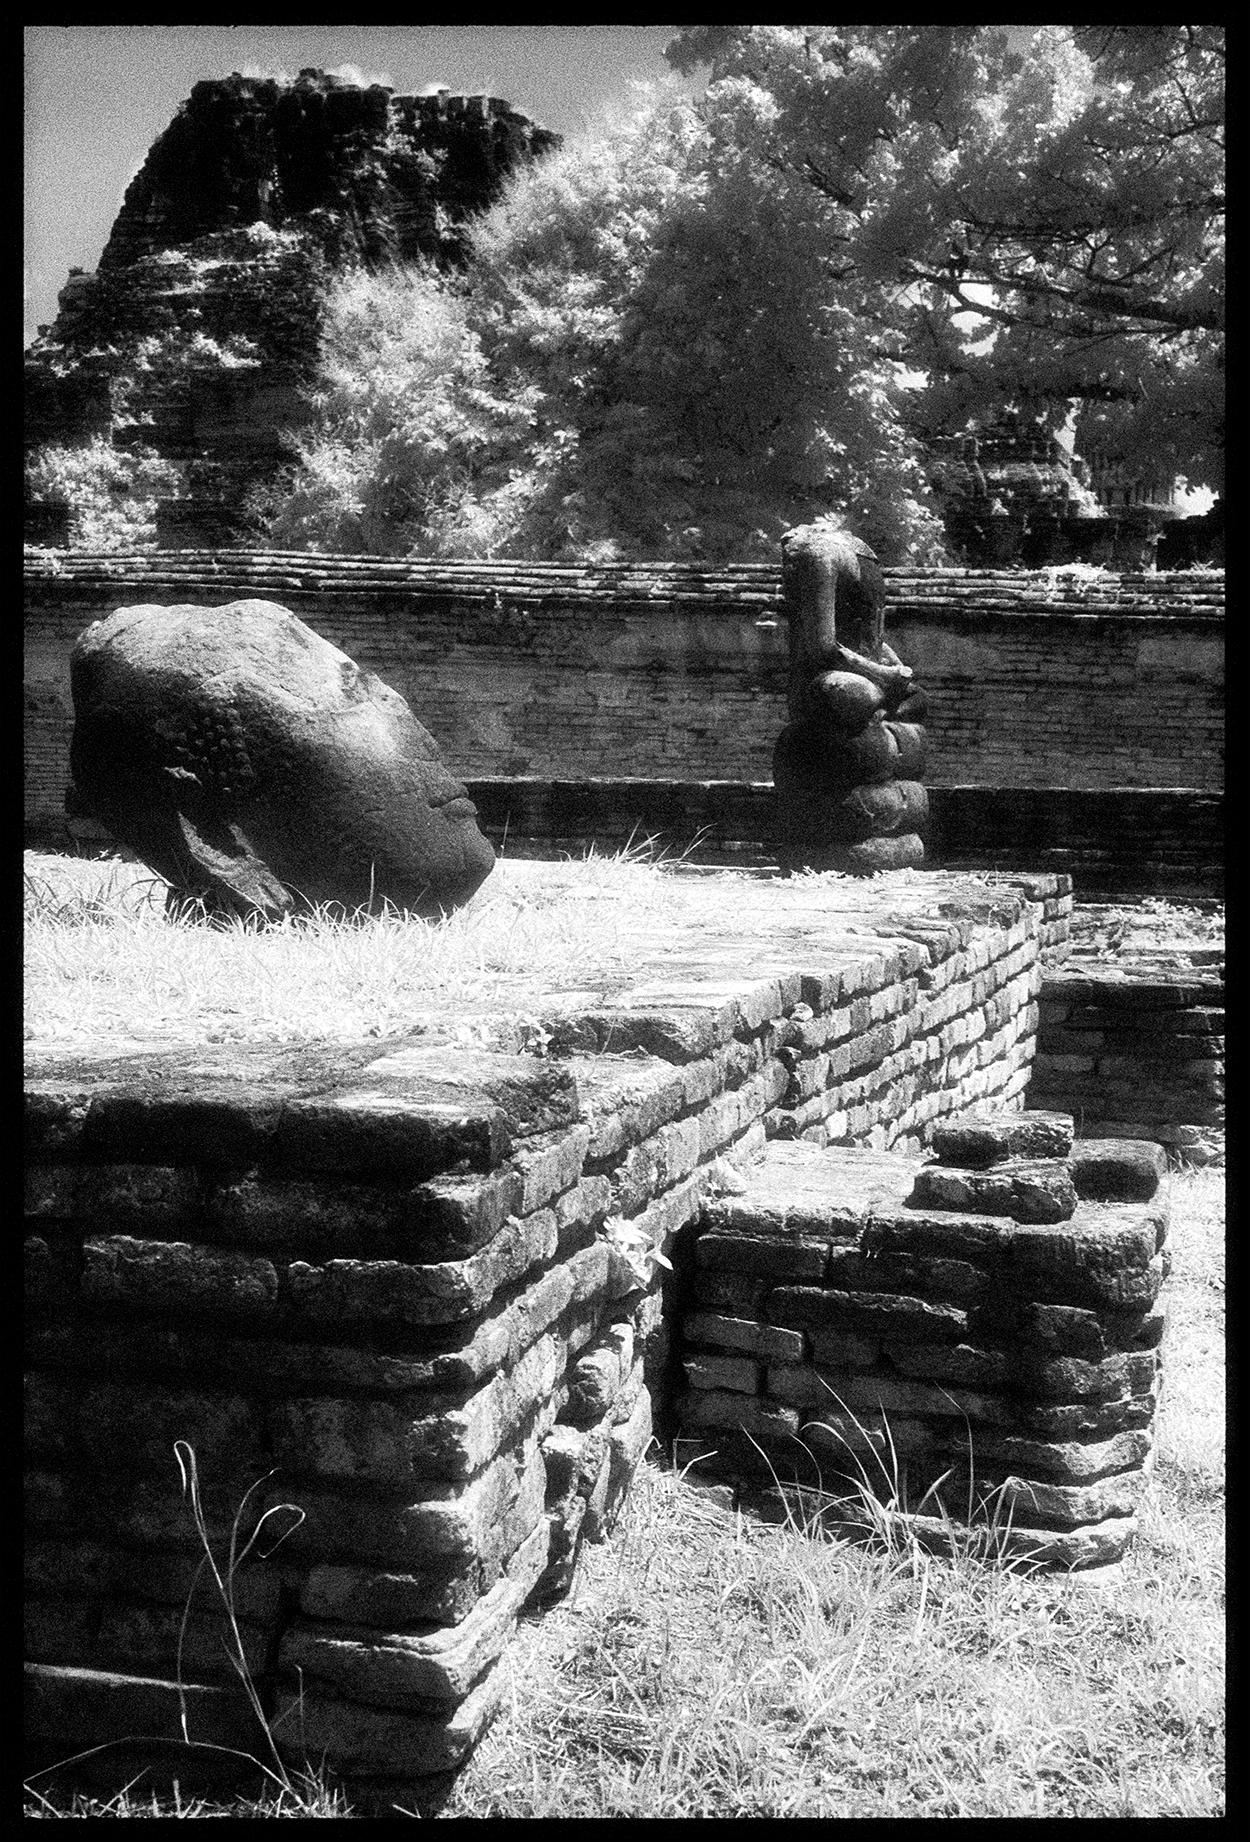 Edward Alfano Landscape Photograph - Ruins, Wat Phra - Contemporary Double Sided Photograph on Aluminum (Black+White)